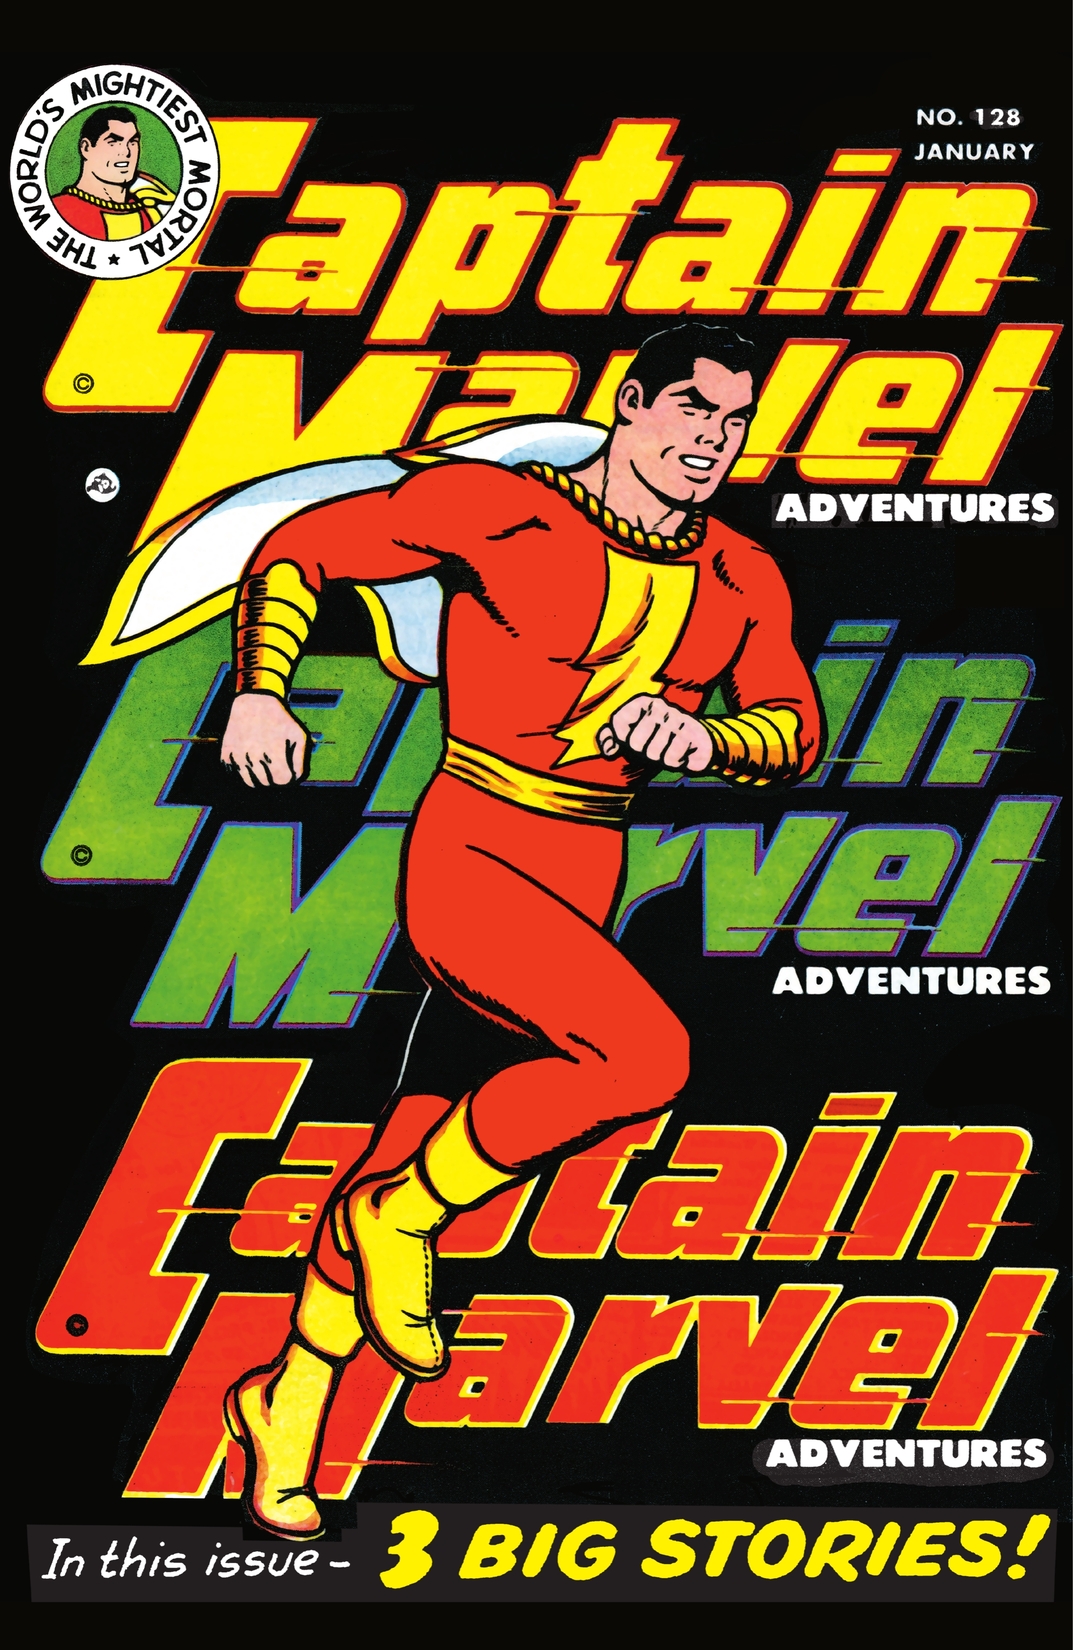 Captain Marvel Adventures #128 preview images